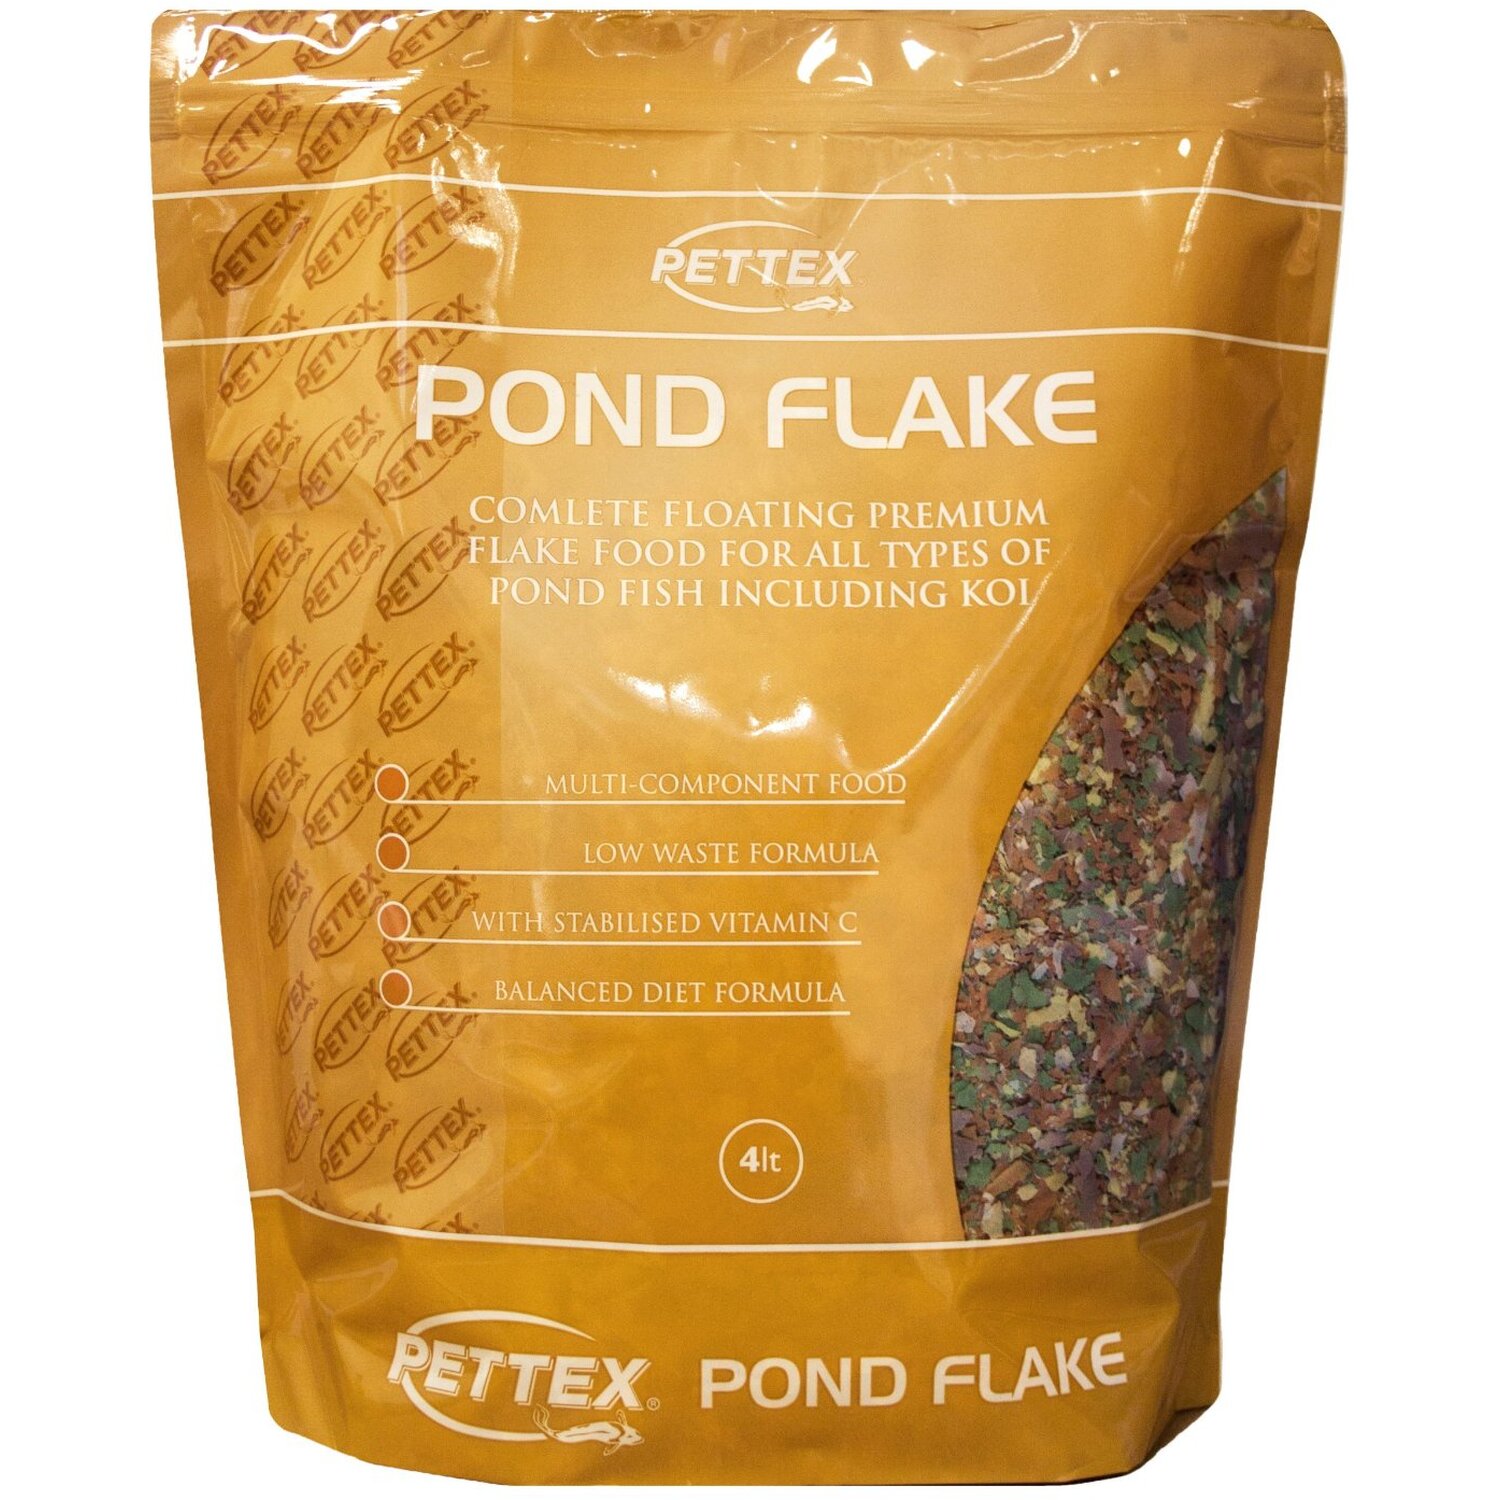 Pettex Pond Flake Feed 800g Image